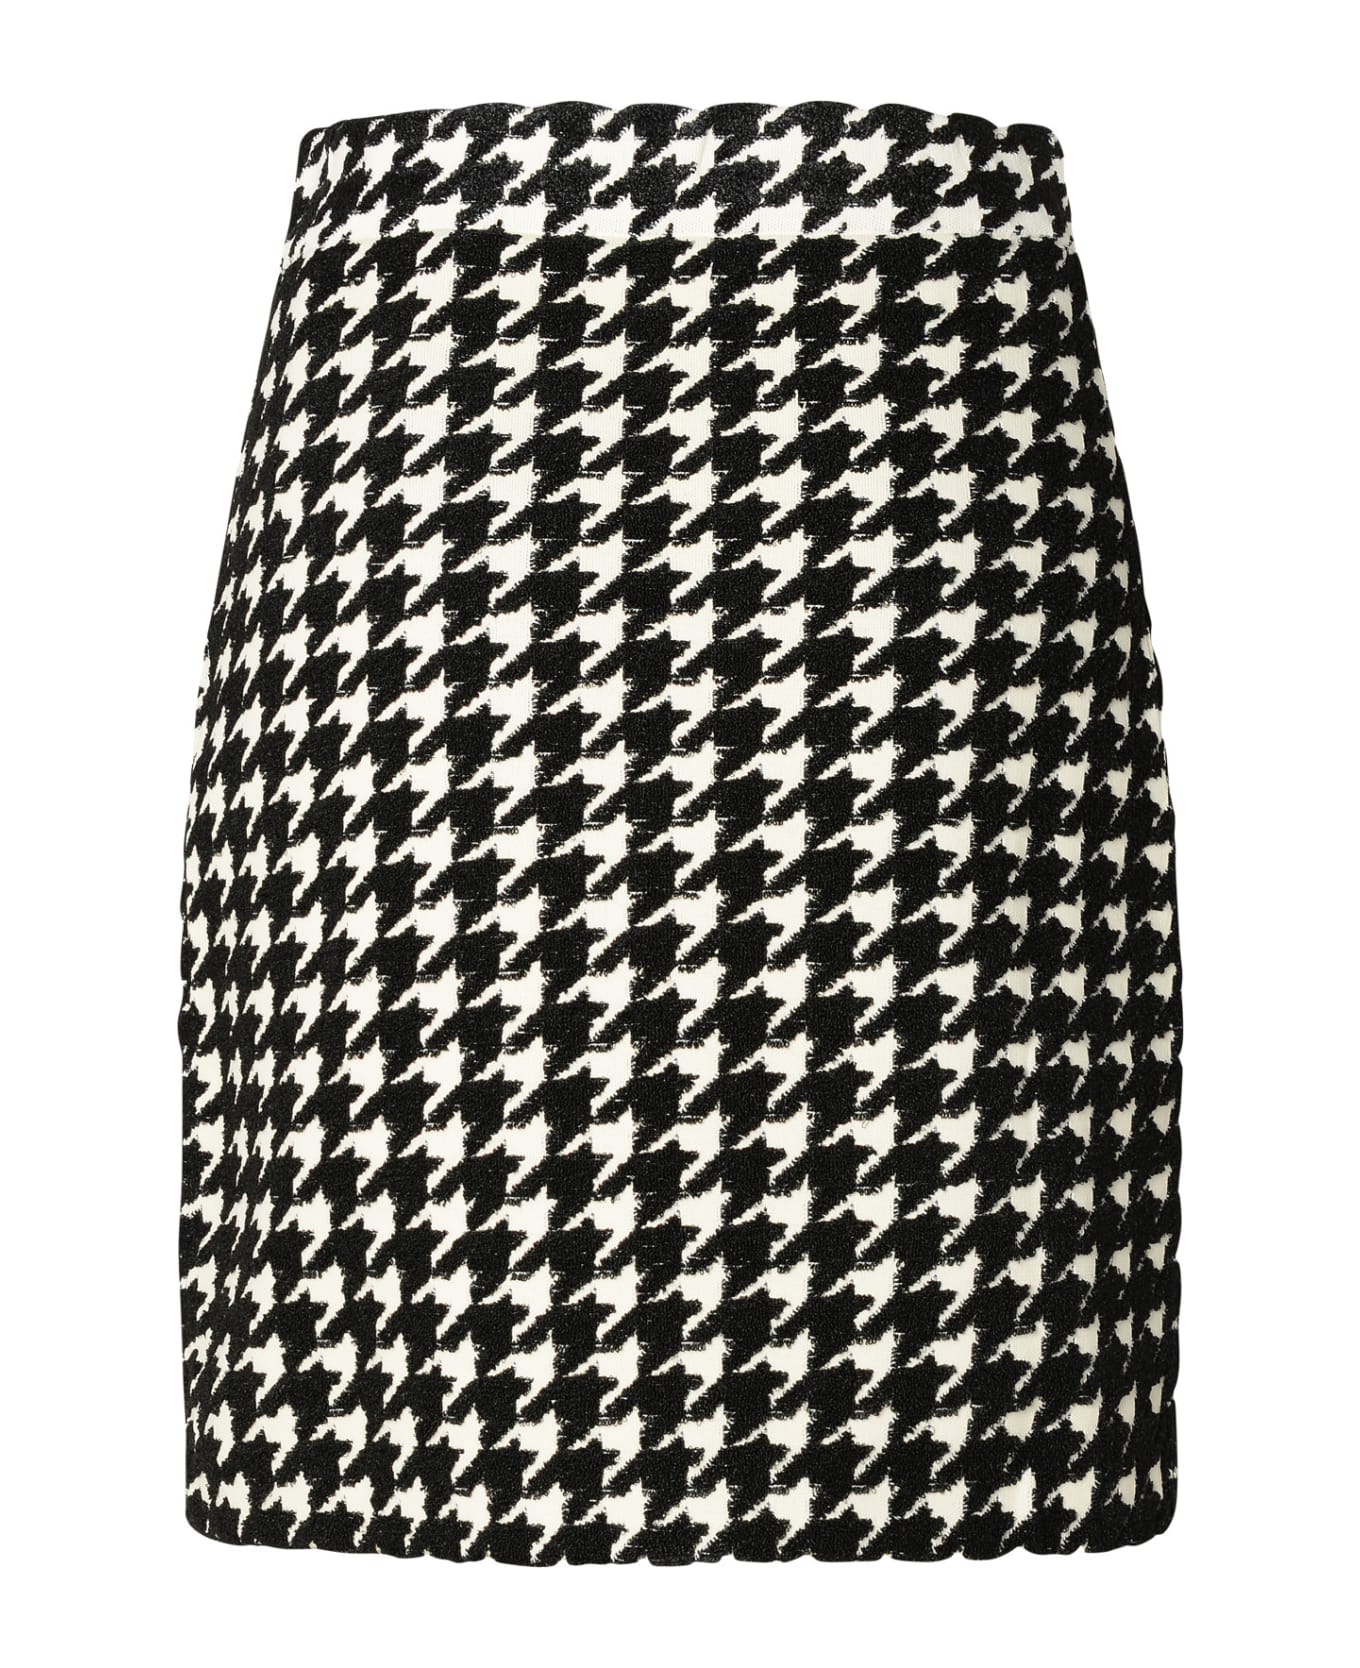 Burberry Black Viscose Blend Skirt - Multicolor スカート